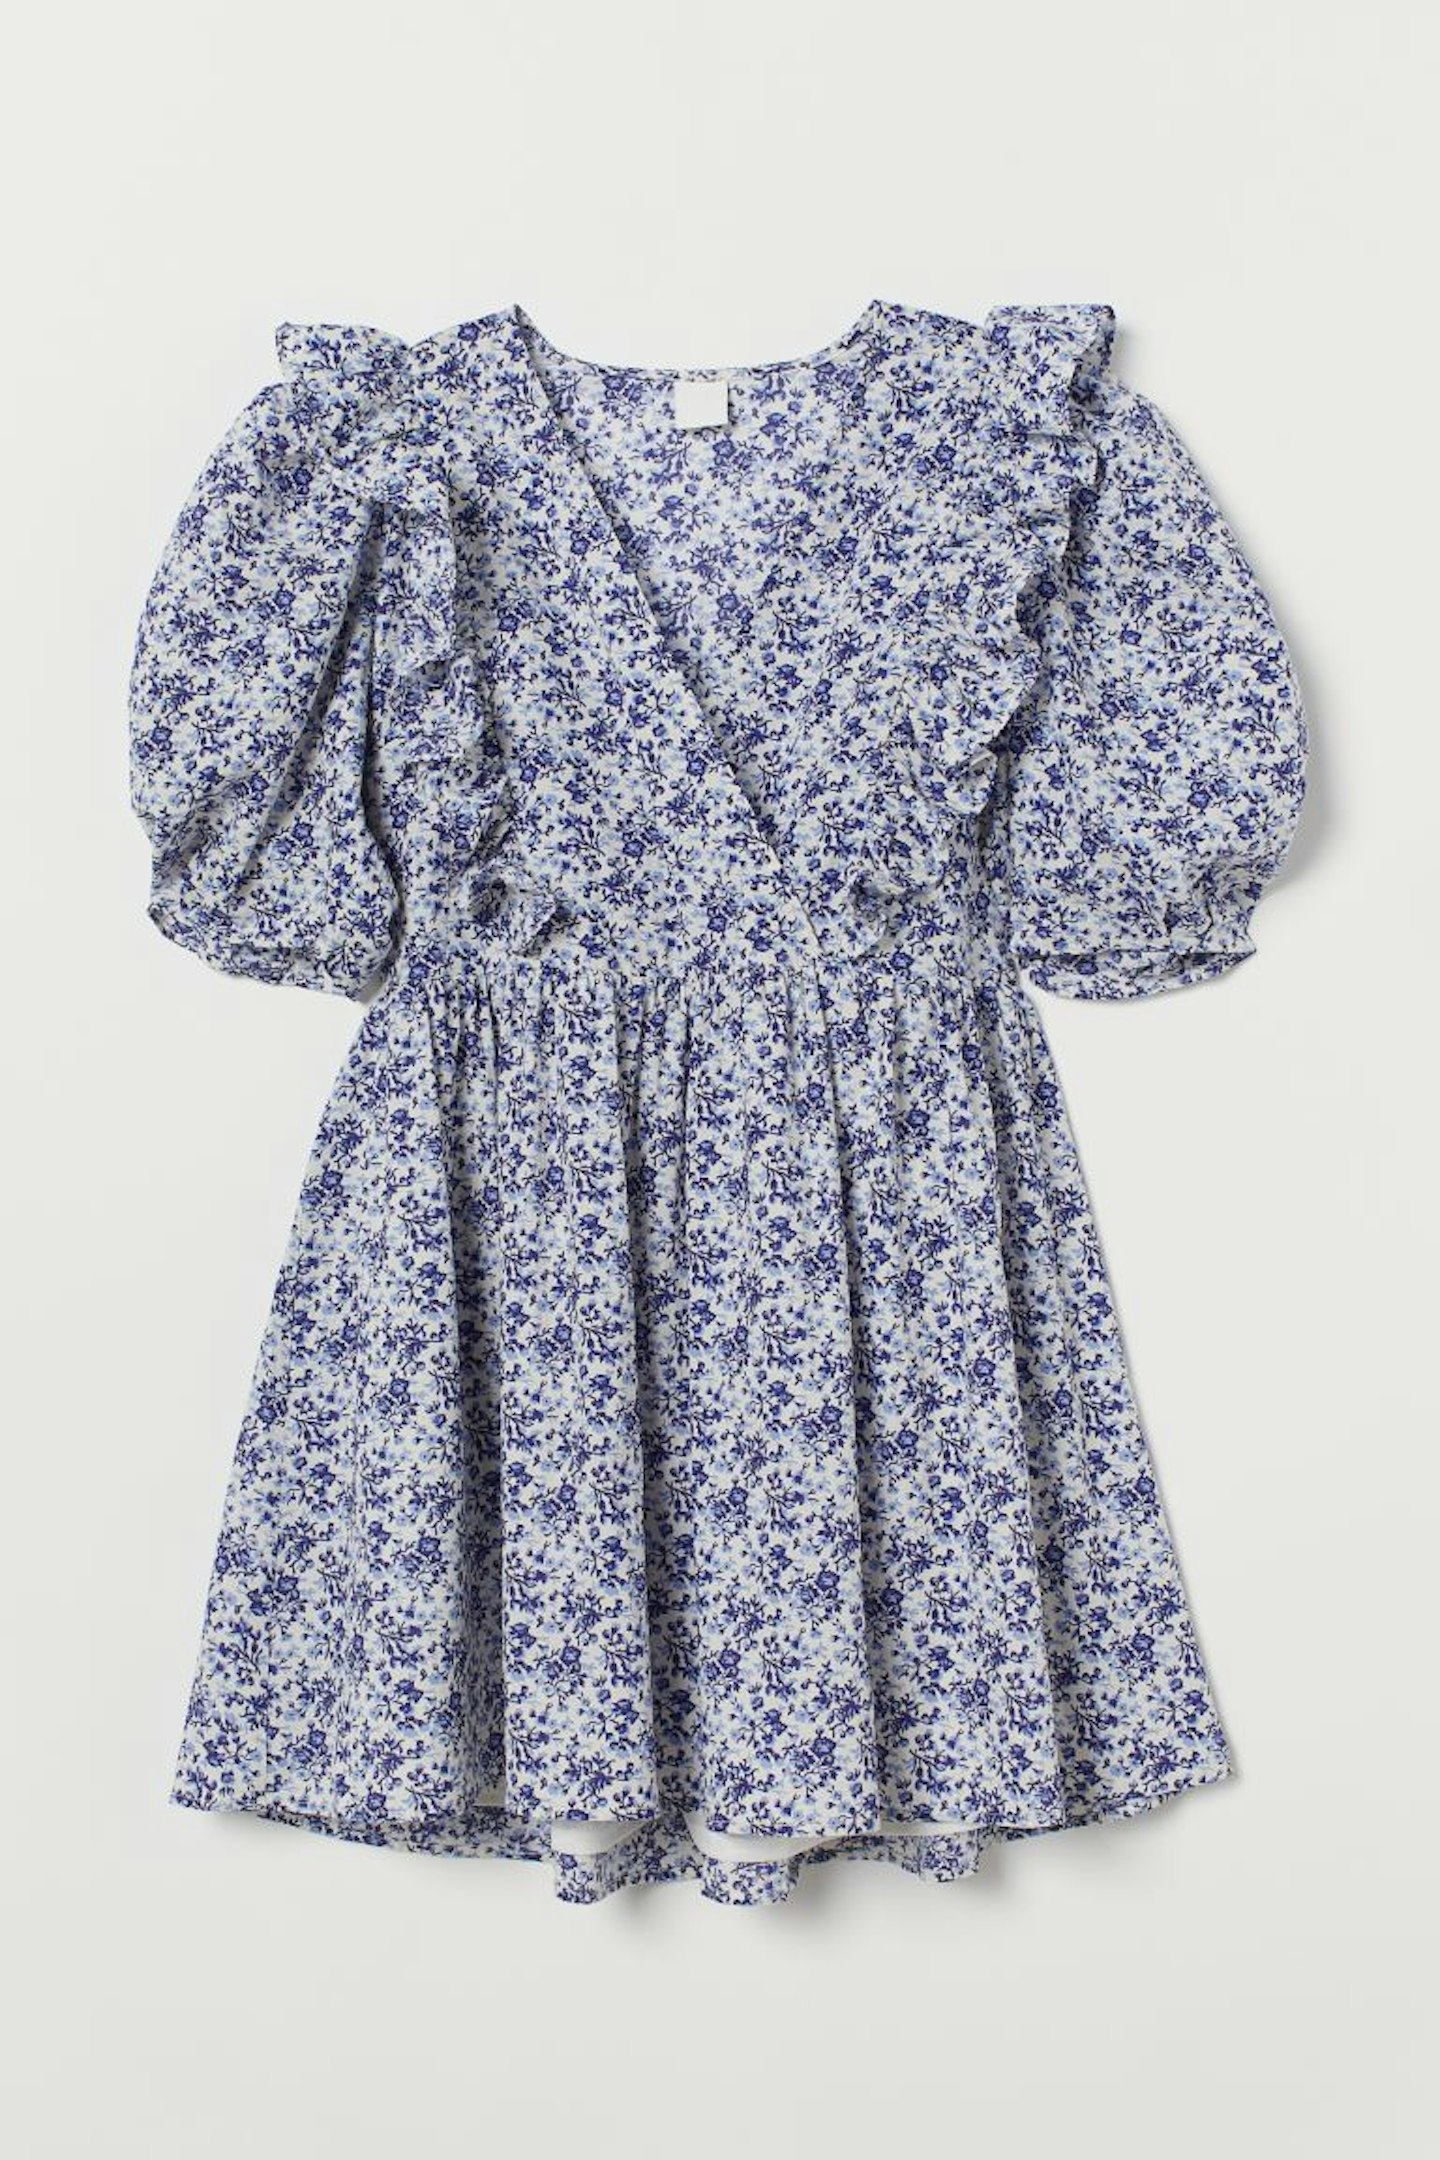 H&M, Puff-sleeved Dress, £24.99